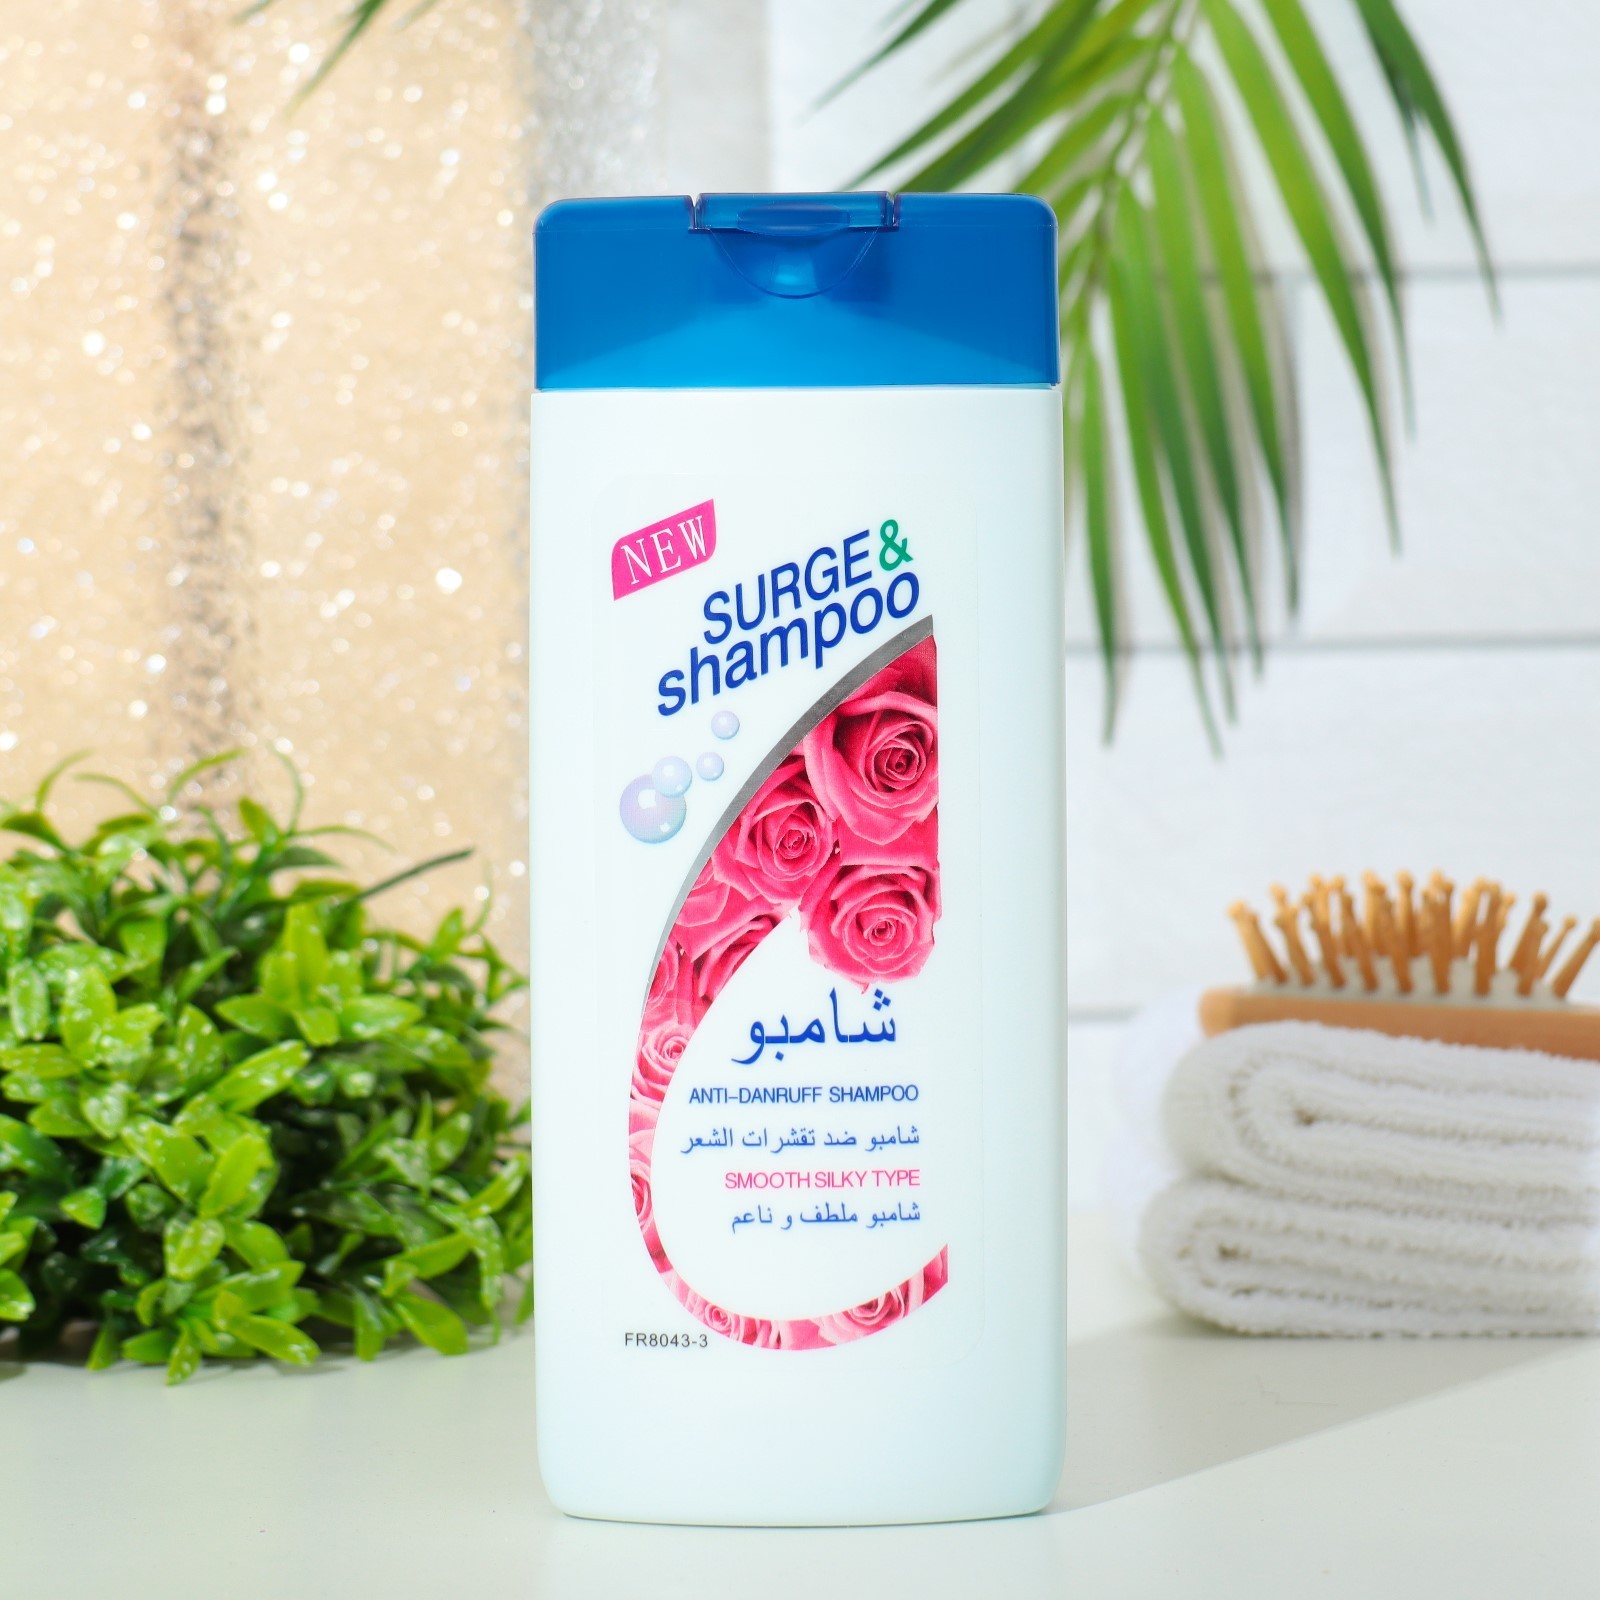 Шампунь Surge&shampoo для волос с розой 400 мл beardburys шампунь для волос против перхоти vital shampoo 1000